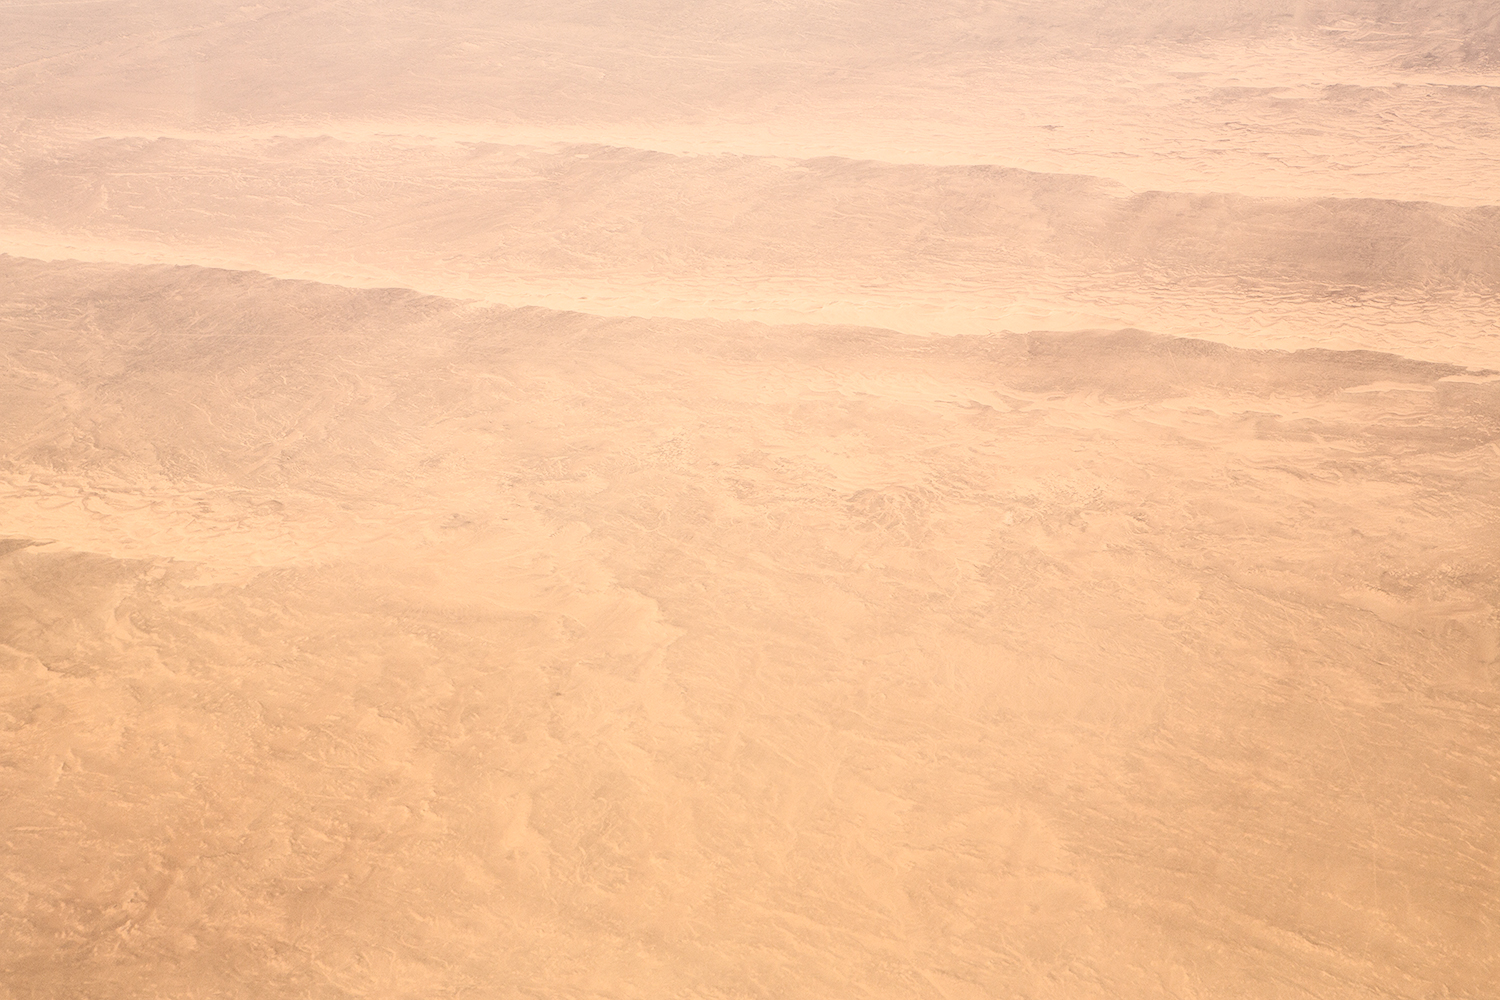  Deserts I, 2015 //  120 cm x 180 cm  